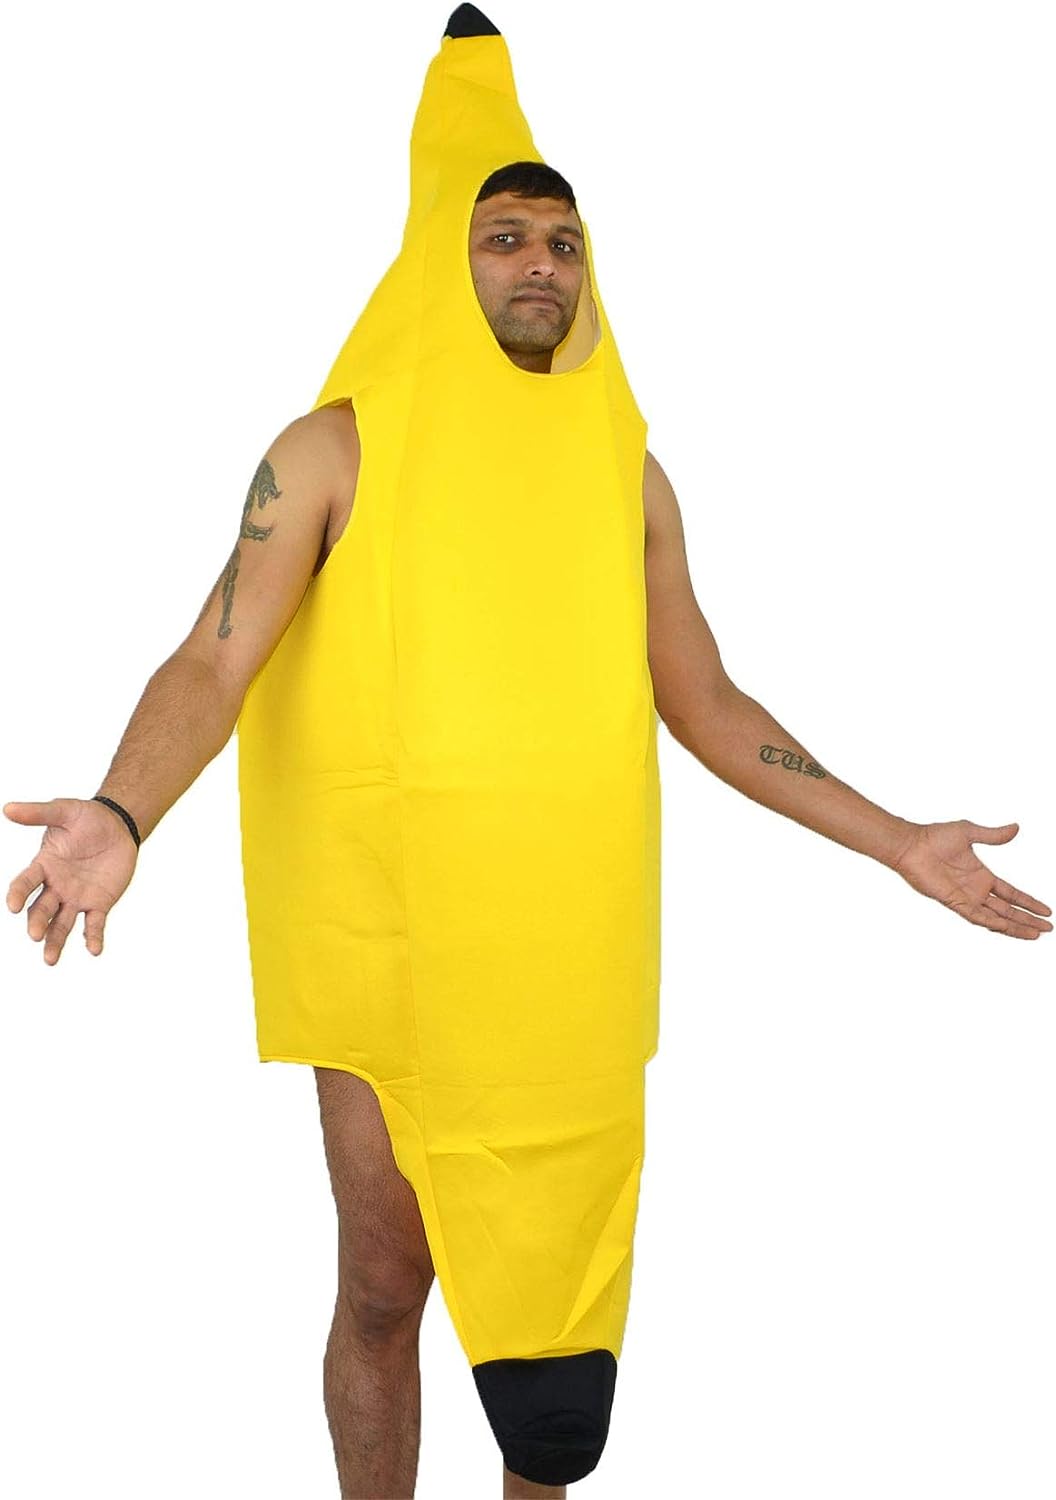 Banana Bananaman Fancy Dress Costume Sleeveless Jumpsuit - Ideal for Stag Night Fun